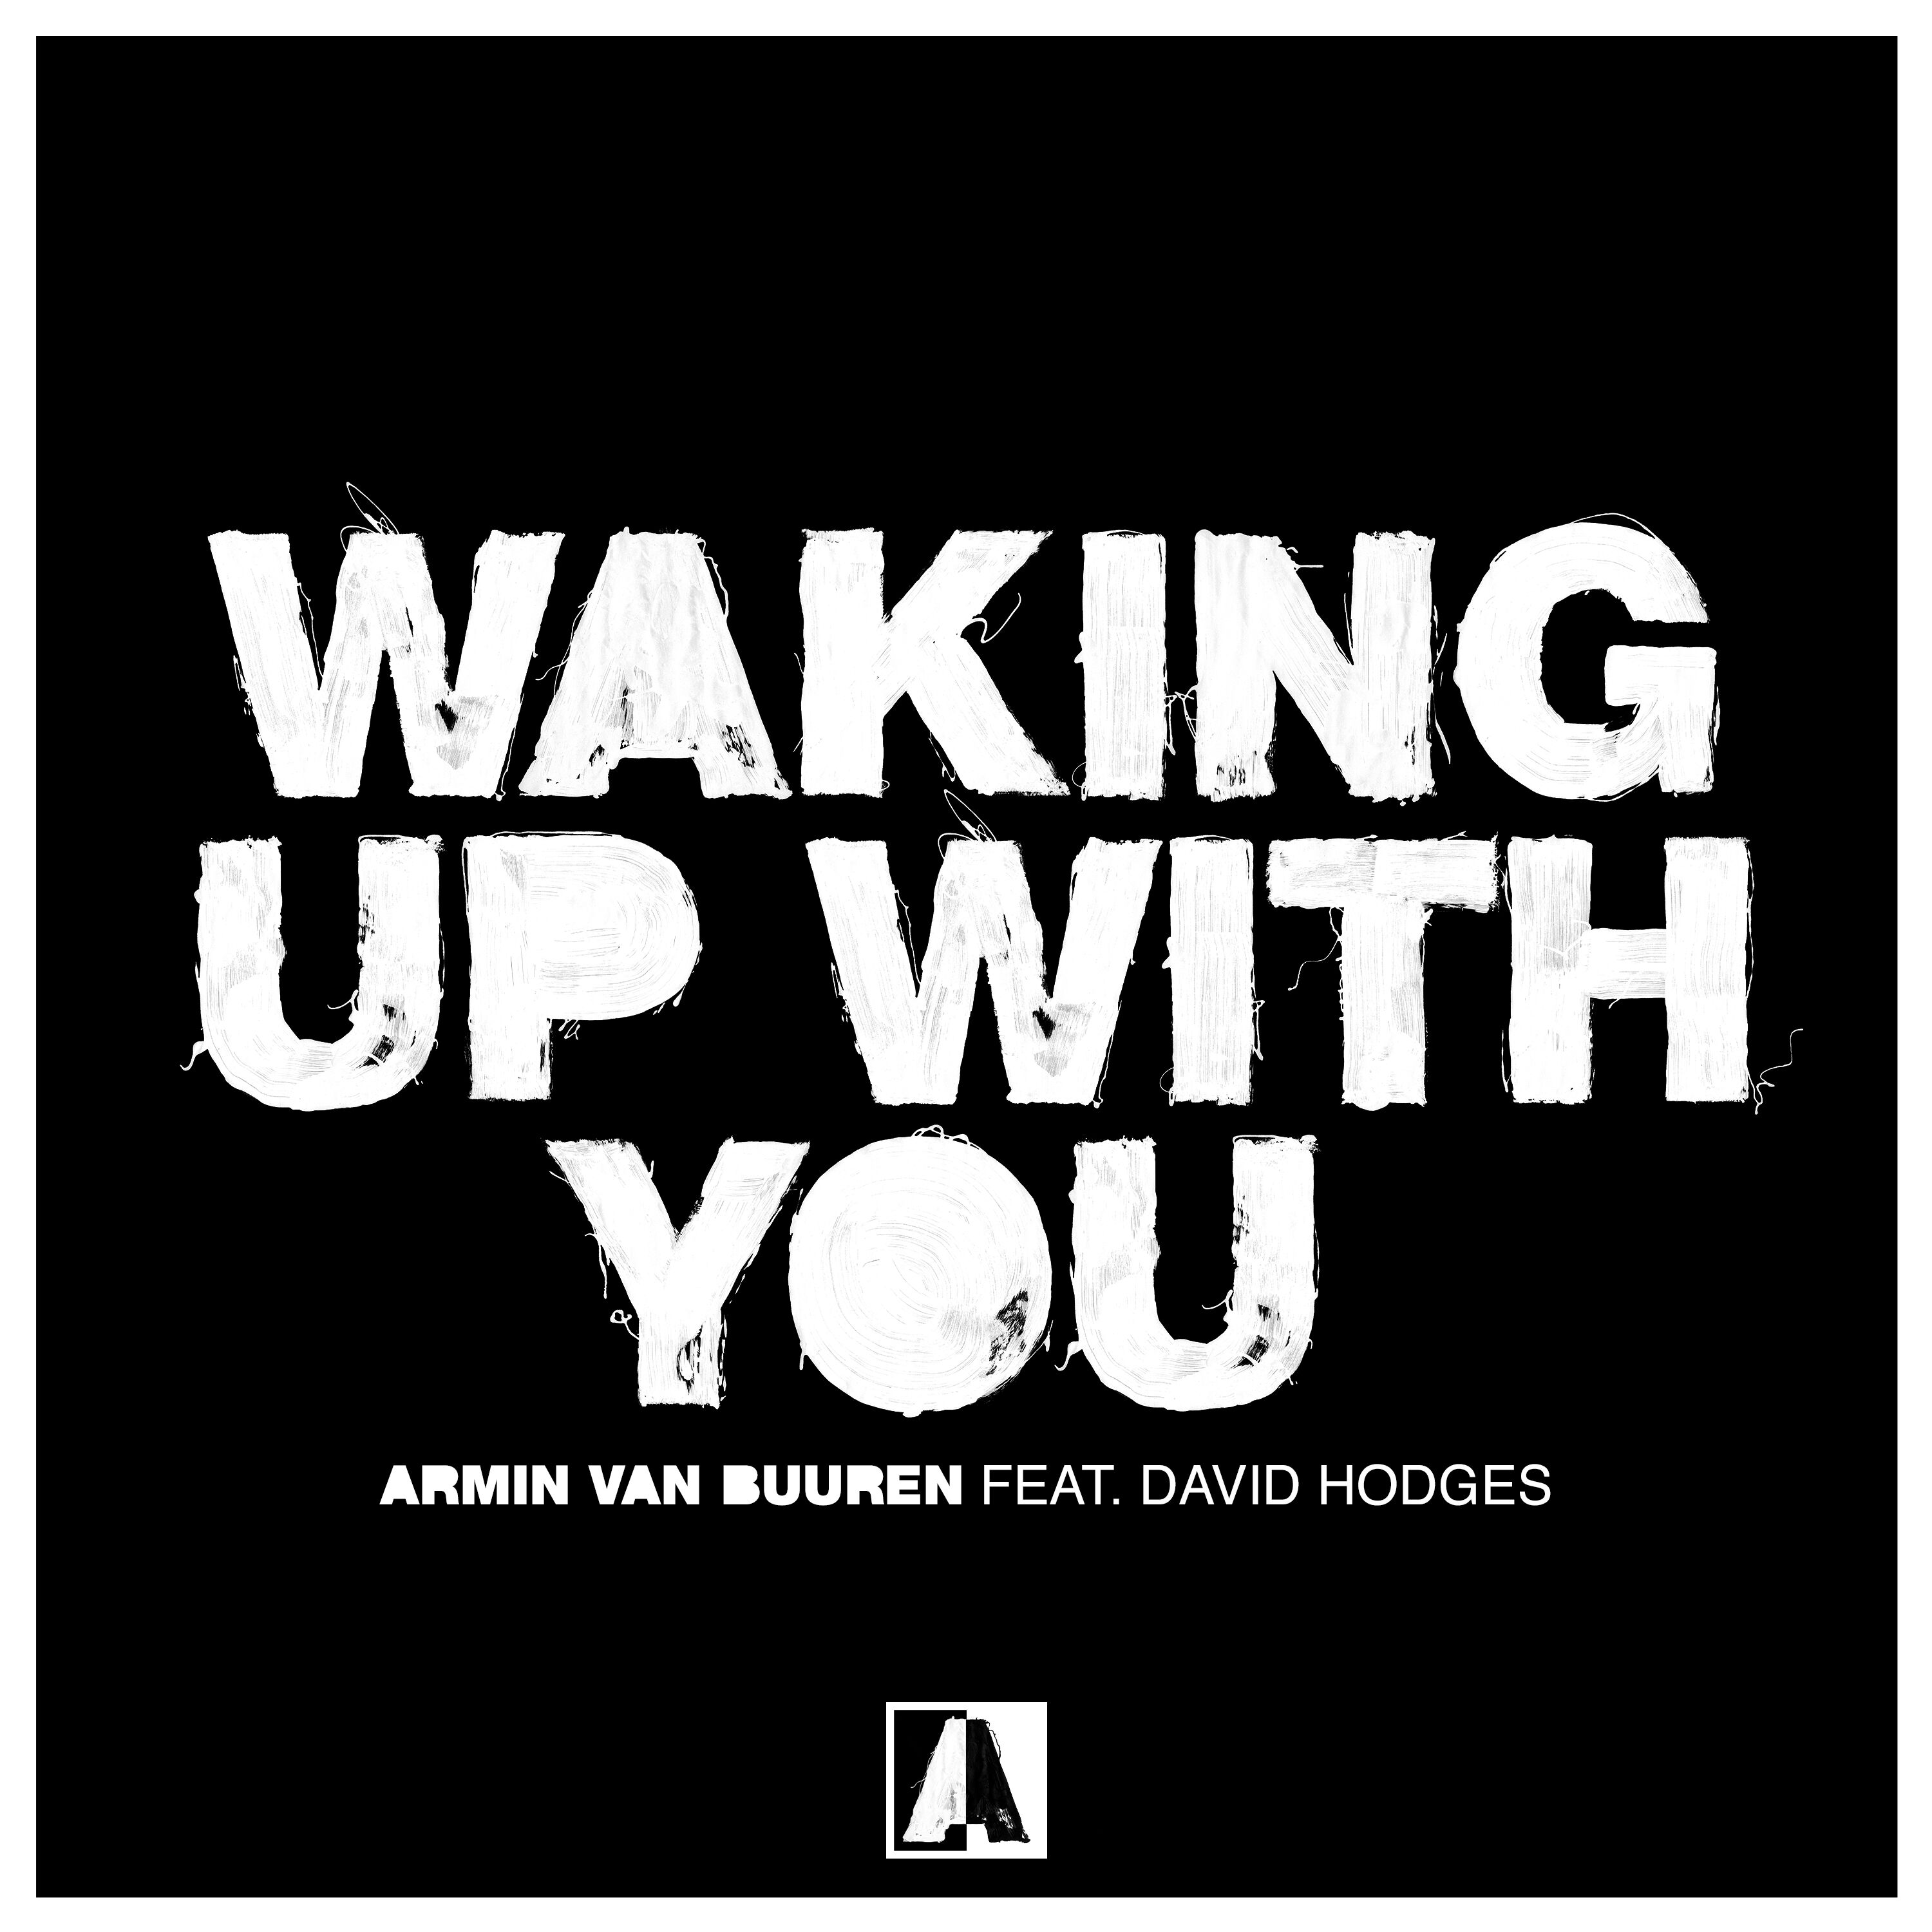 Armin van Buuren feat. David Hodges presents Waking up With You on Armada Music